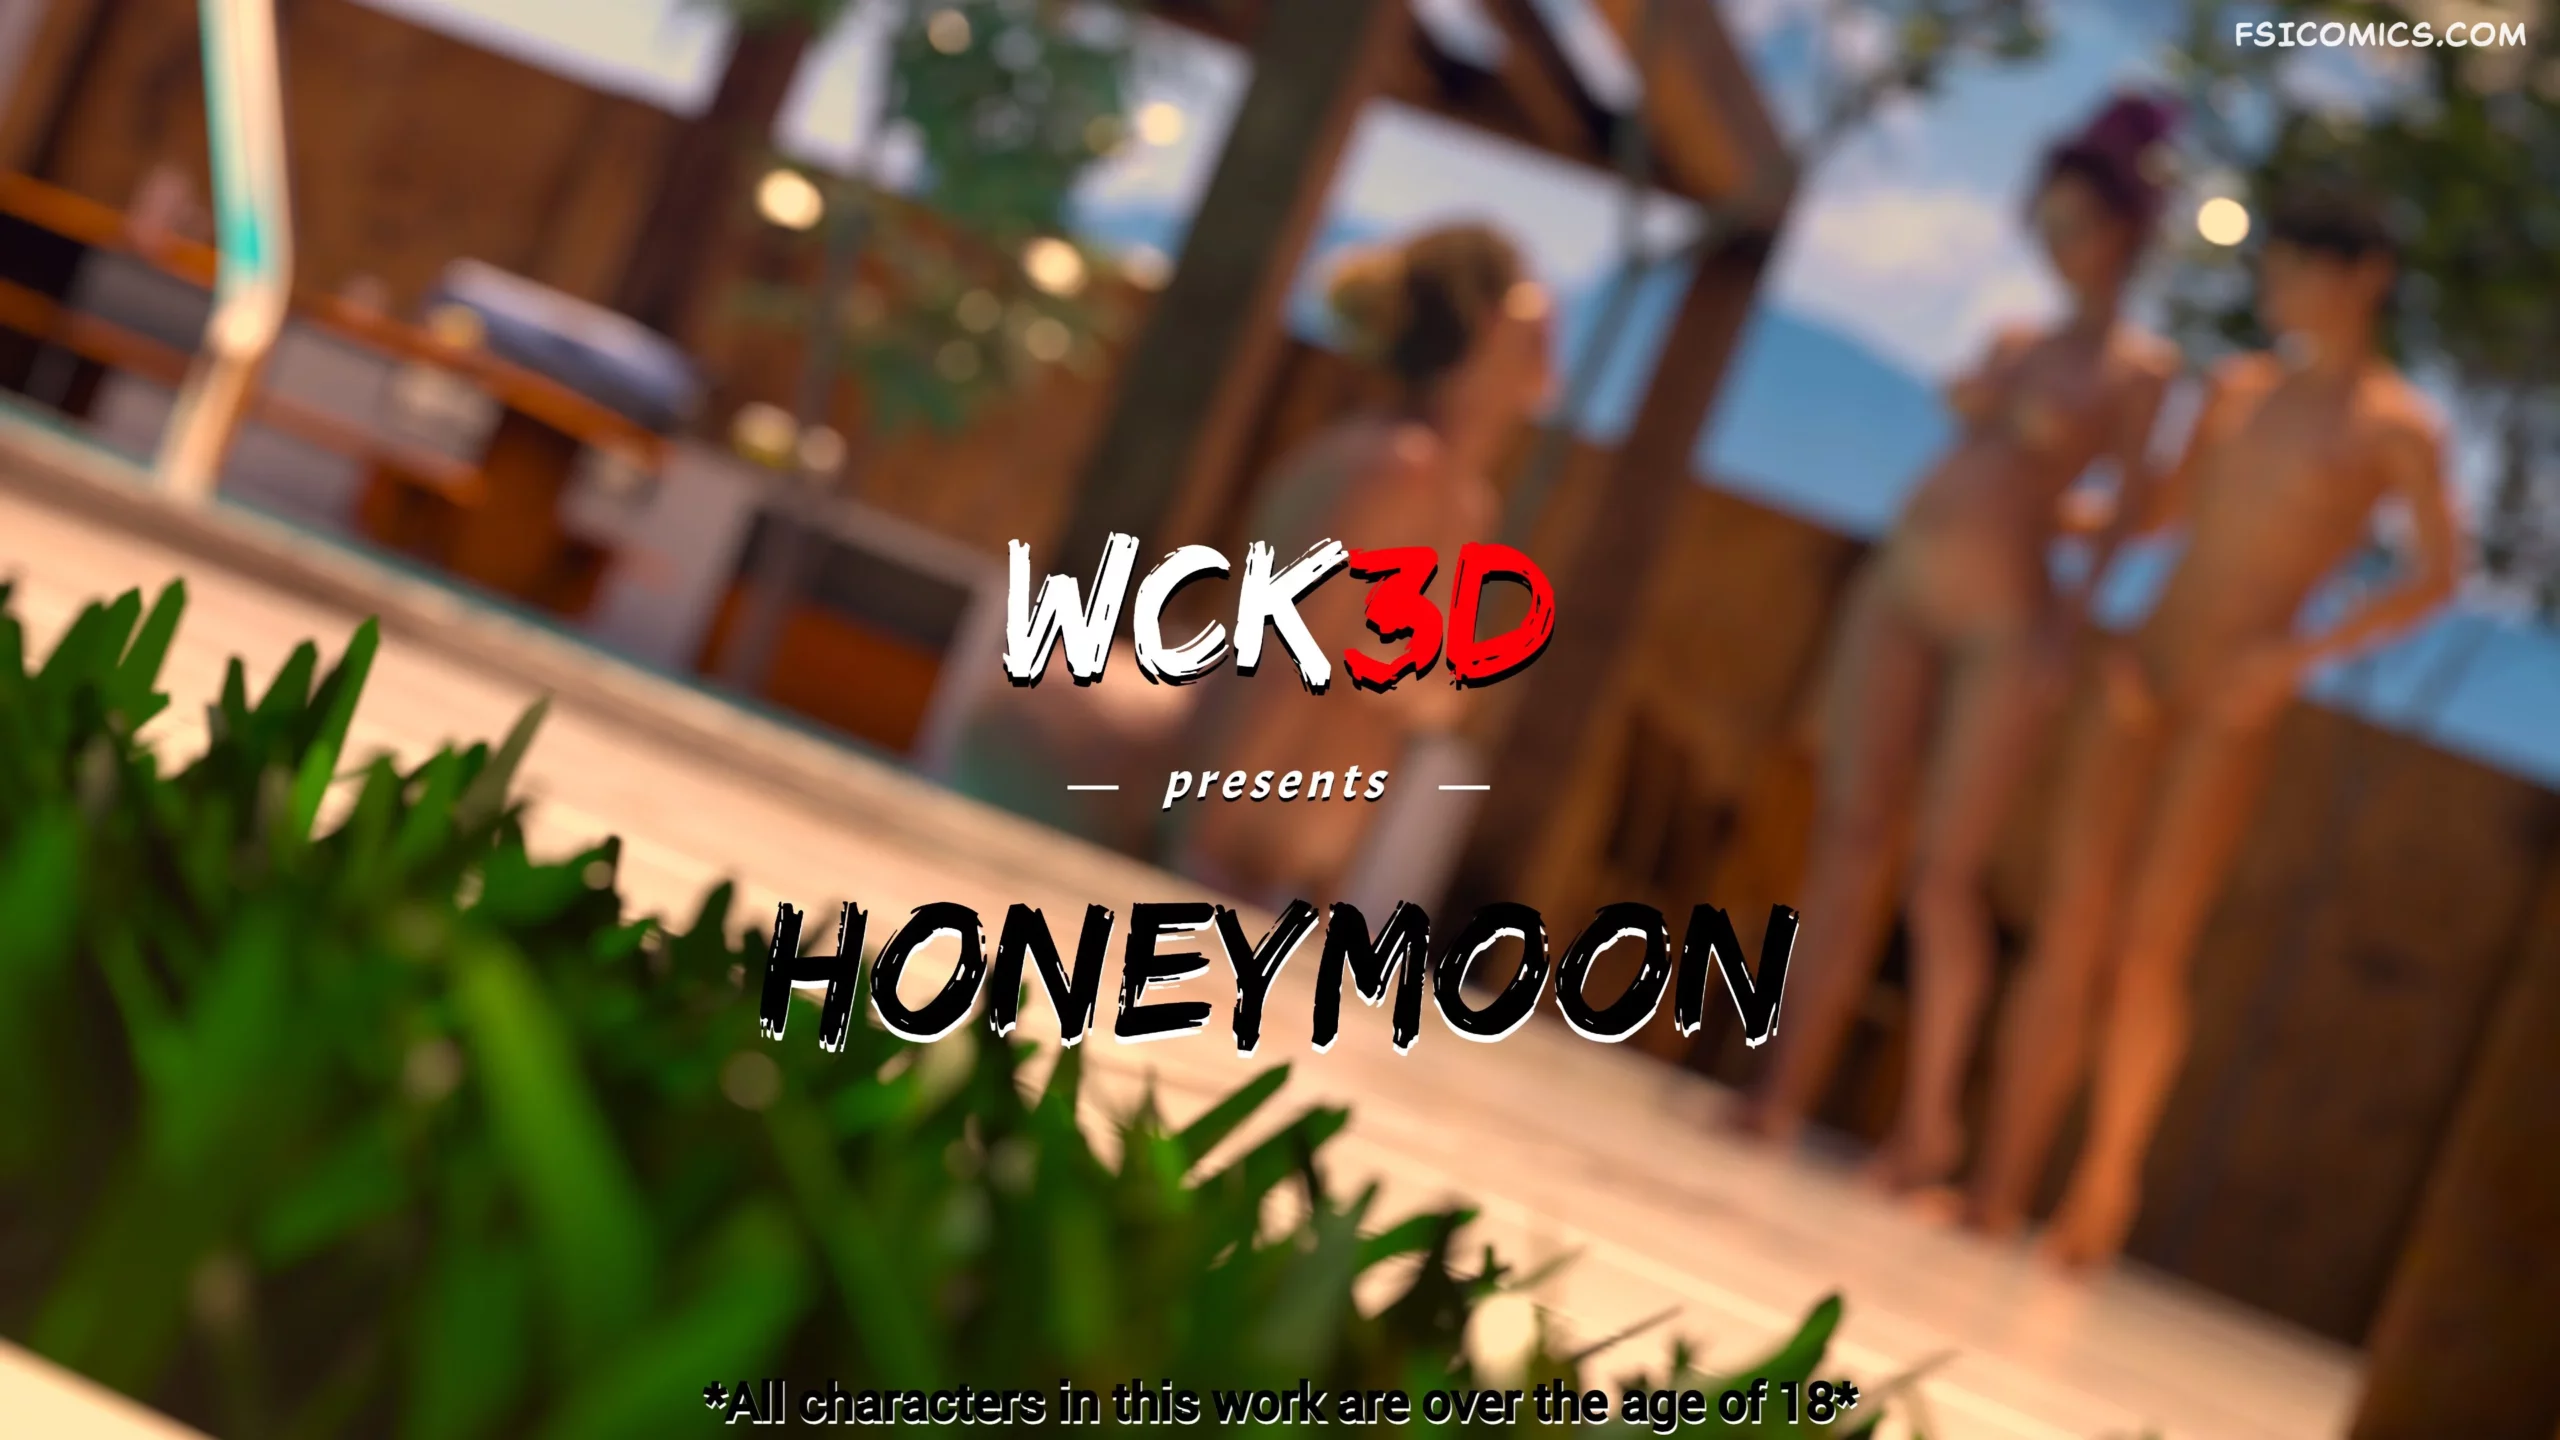 Between Us - Honeymoon - WCK3D - 3 - FSIComics